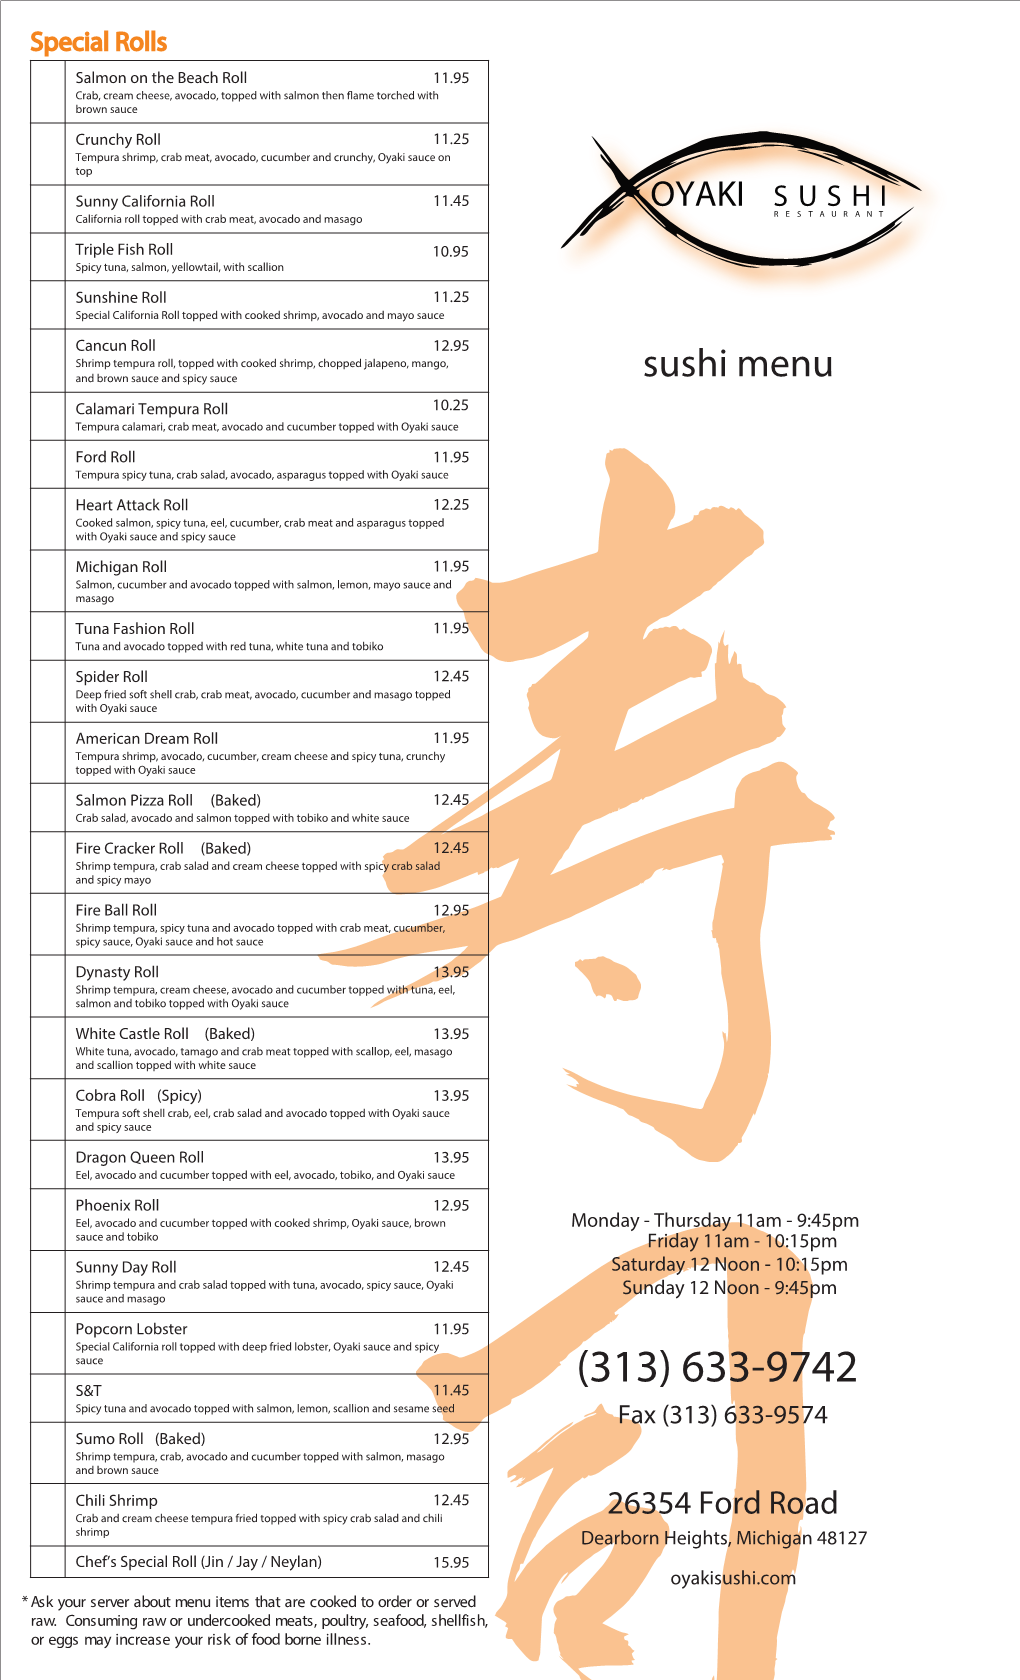 Sushi Menu Calamari Tempura Roll 10.25 Tempura Calamari, Crab Meat, Avocado and Cucumber Topped with Oyaki Sauce